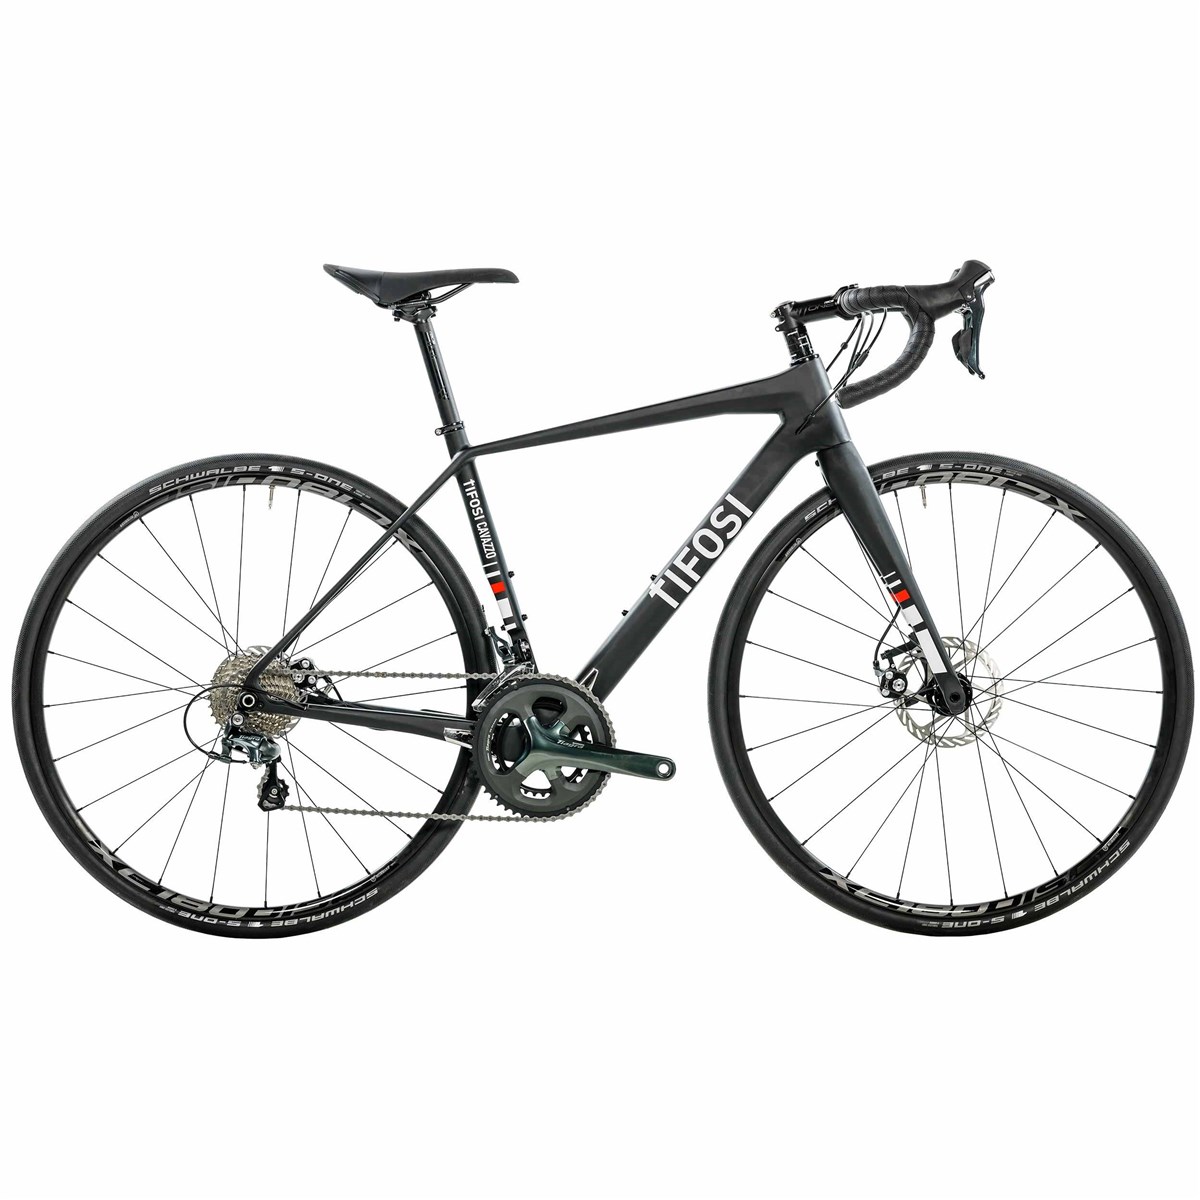 Tifosi Cavazzo Carbon Disc Tiagra 2017 - Road Bike product image